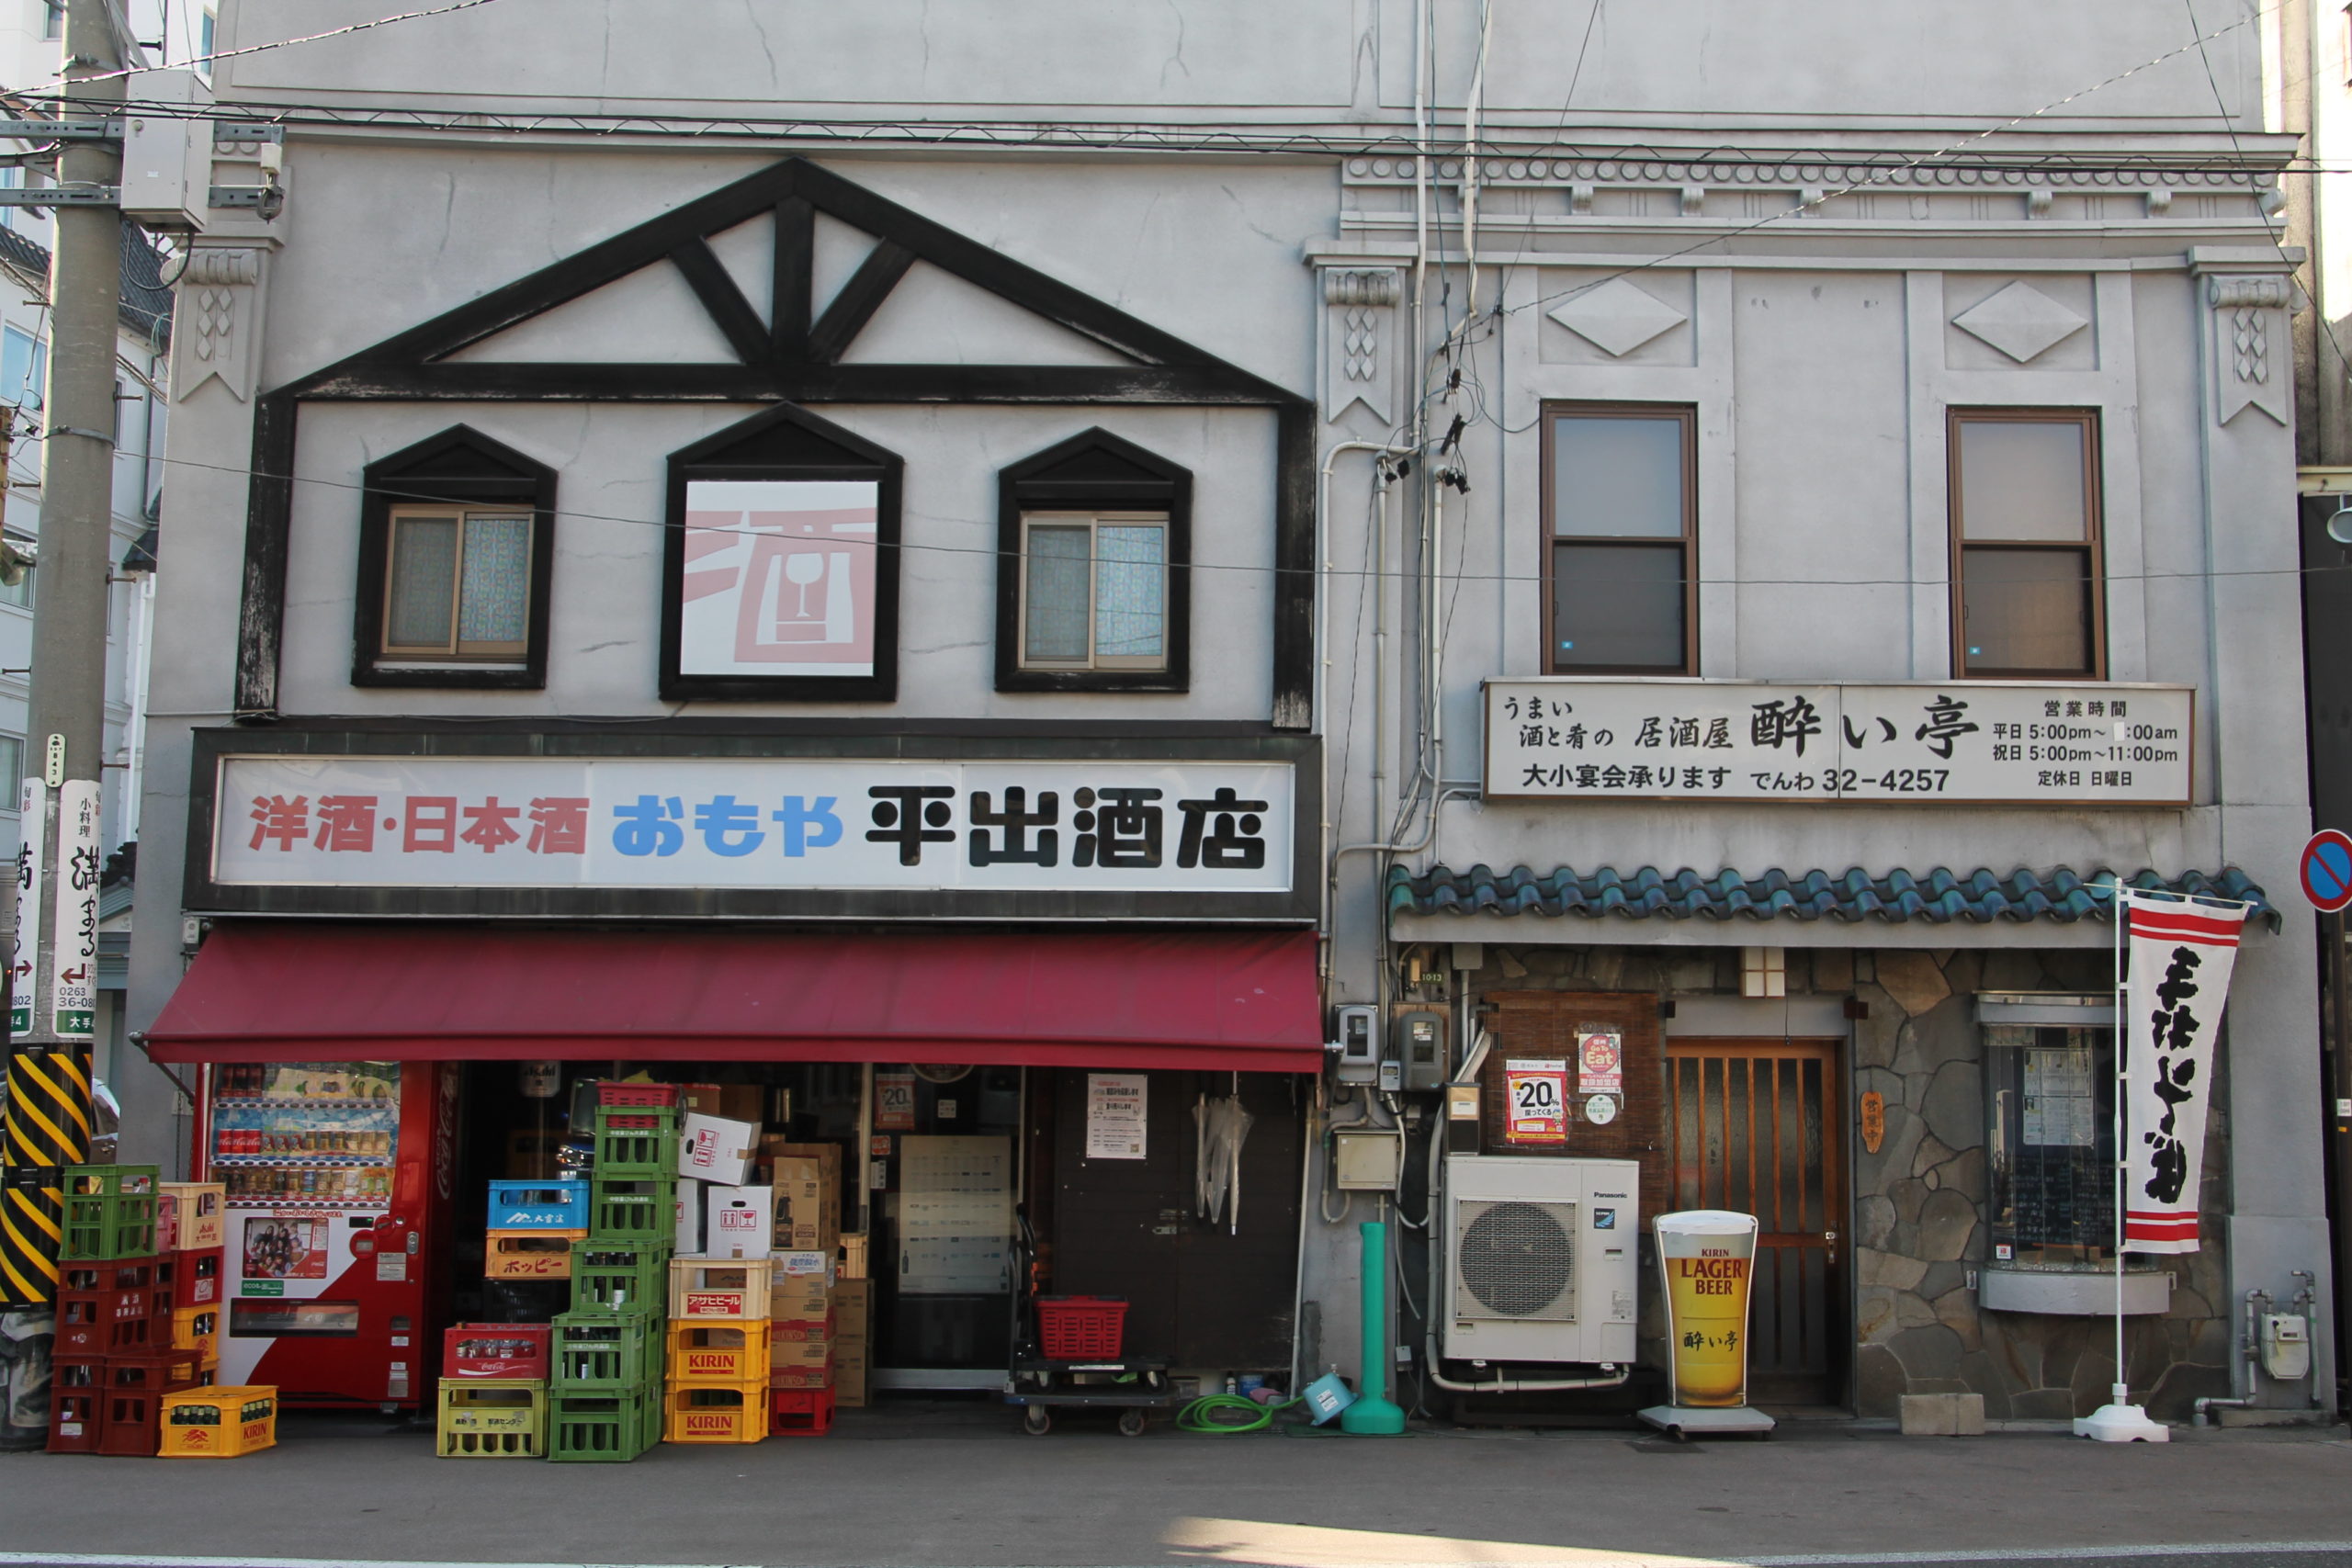 The Agetsuchi-machi Neighborhood building